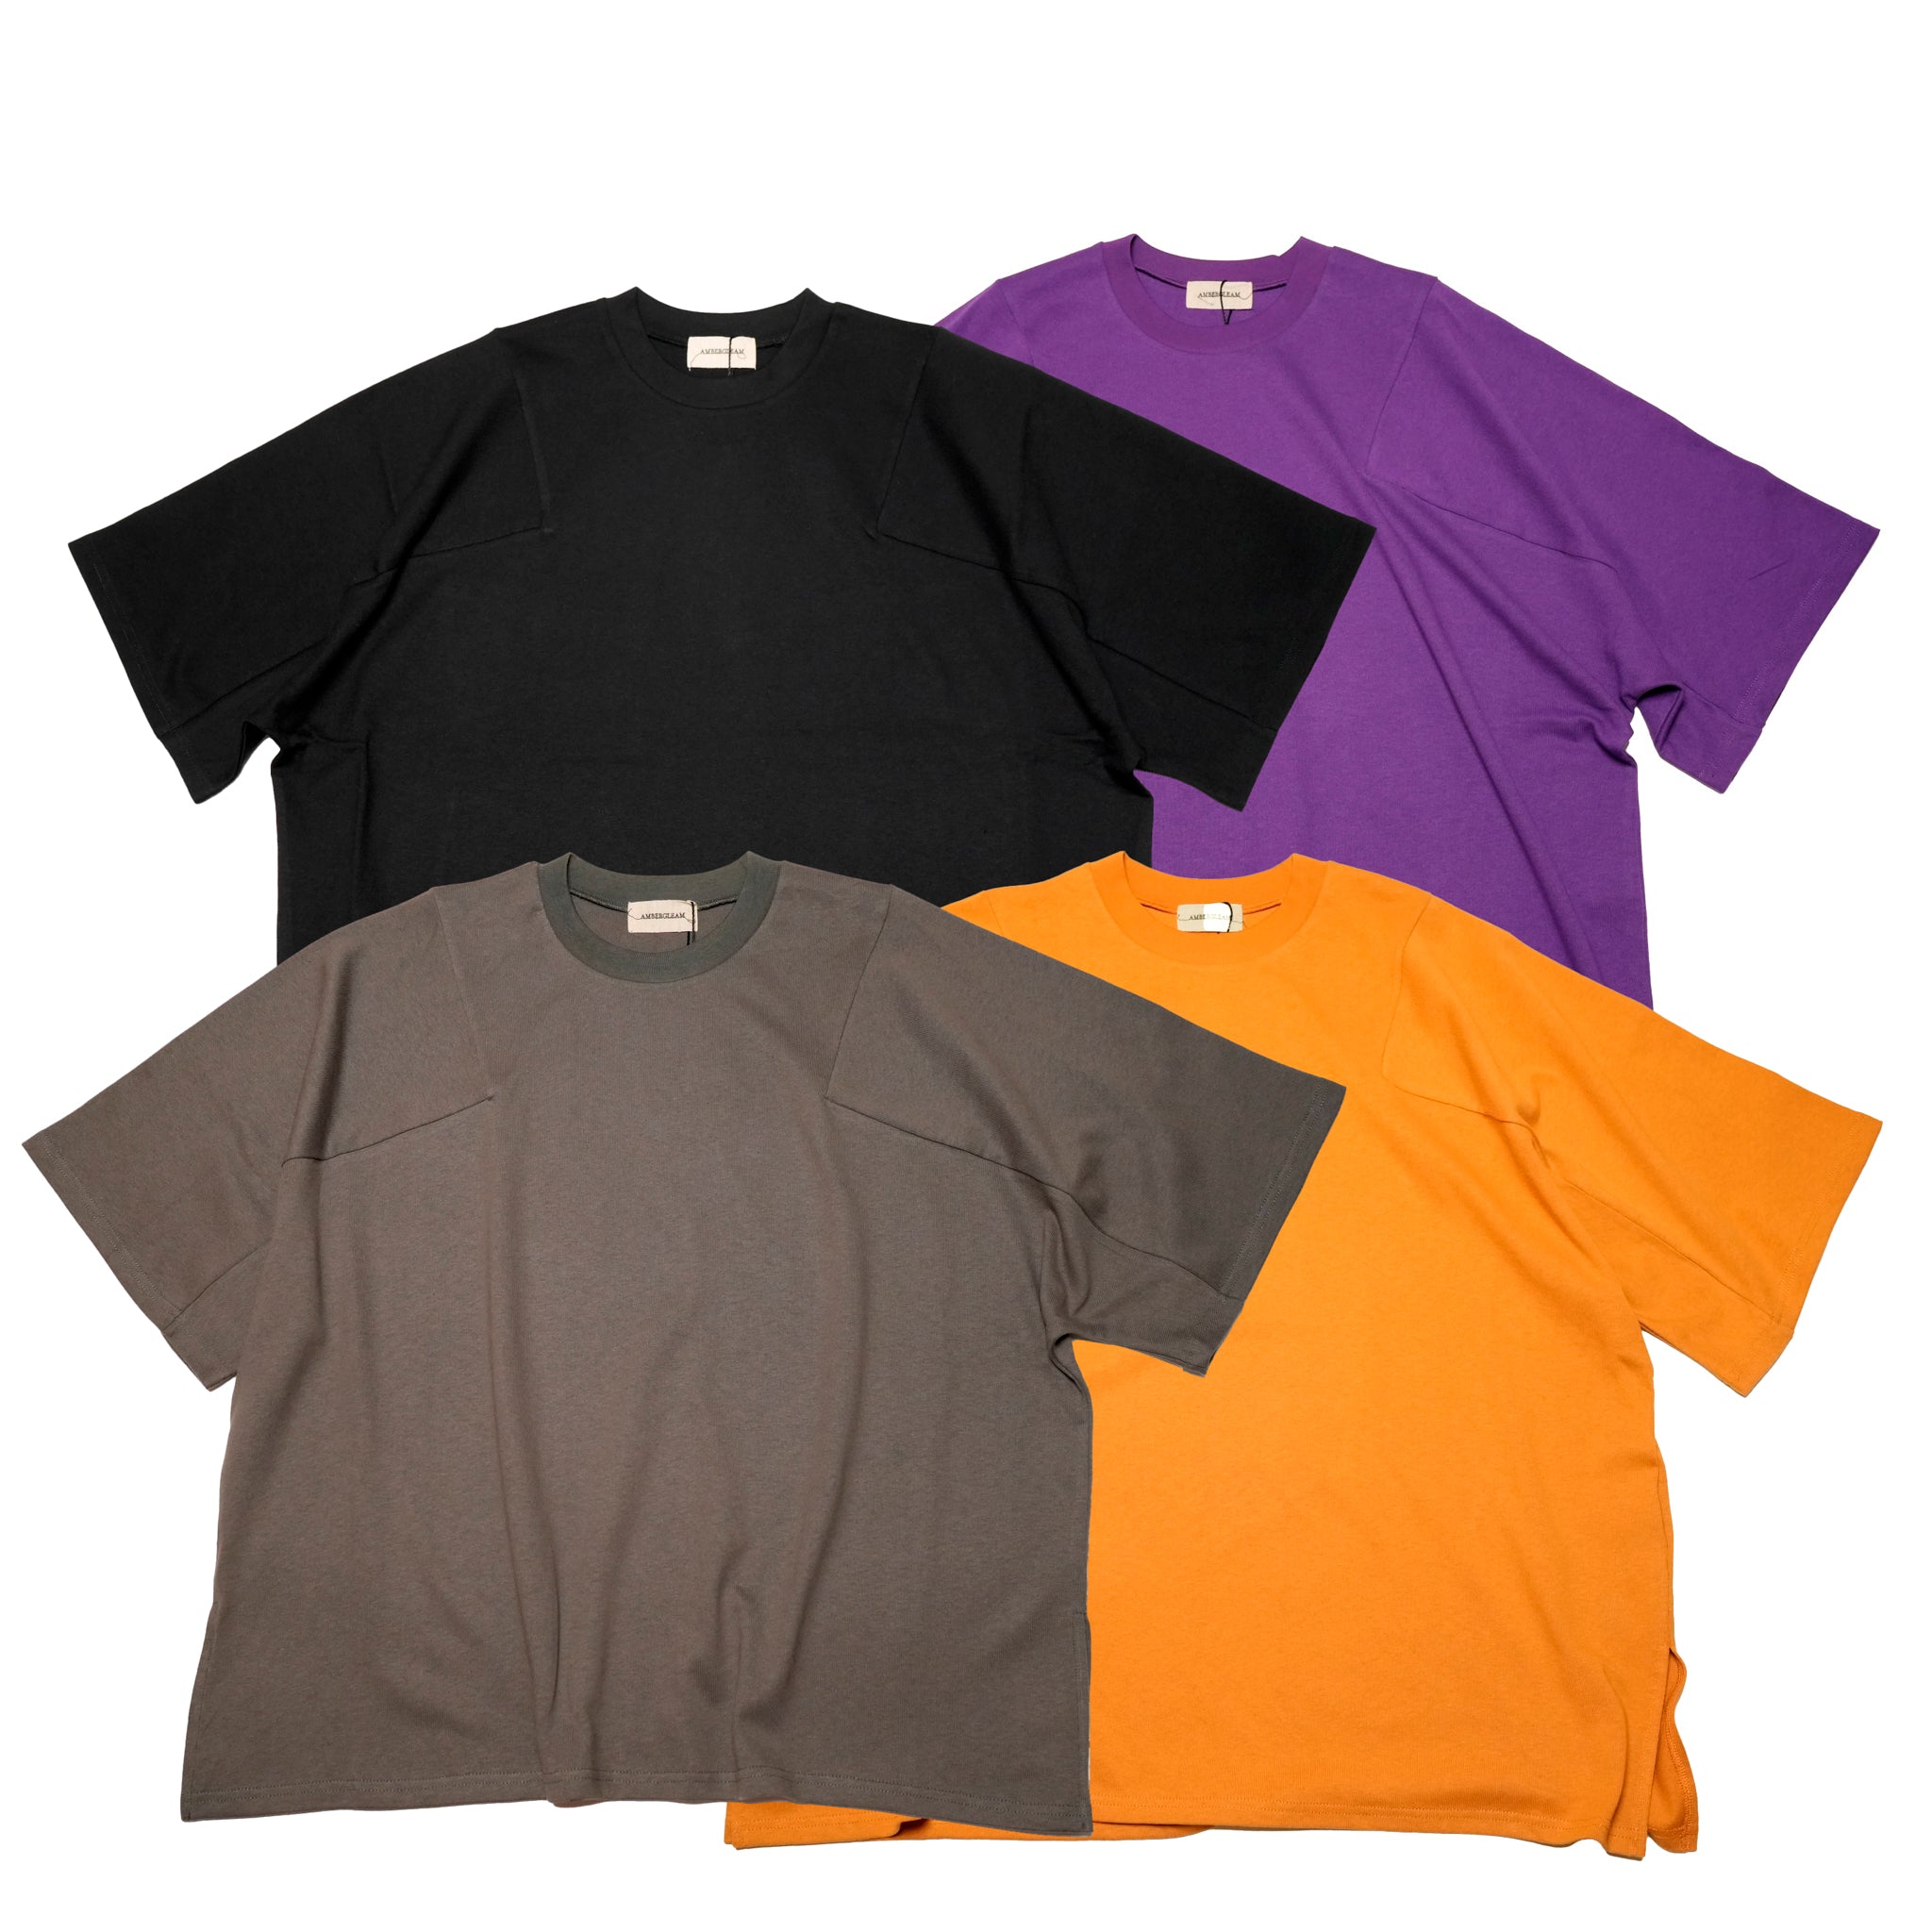 Name:Panel Basic T-Shirt | Color:Black/Moon Gray/Bitter Orange/Violet【AMBERGLEAM_アンバーグリーム】| No:1168141311